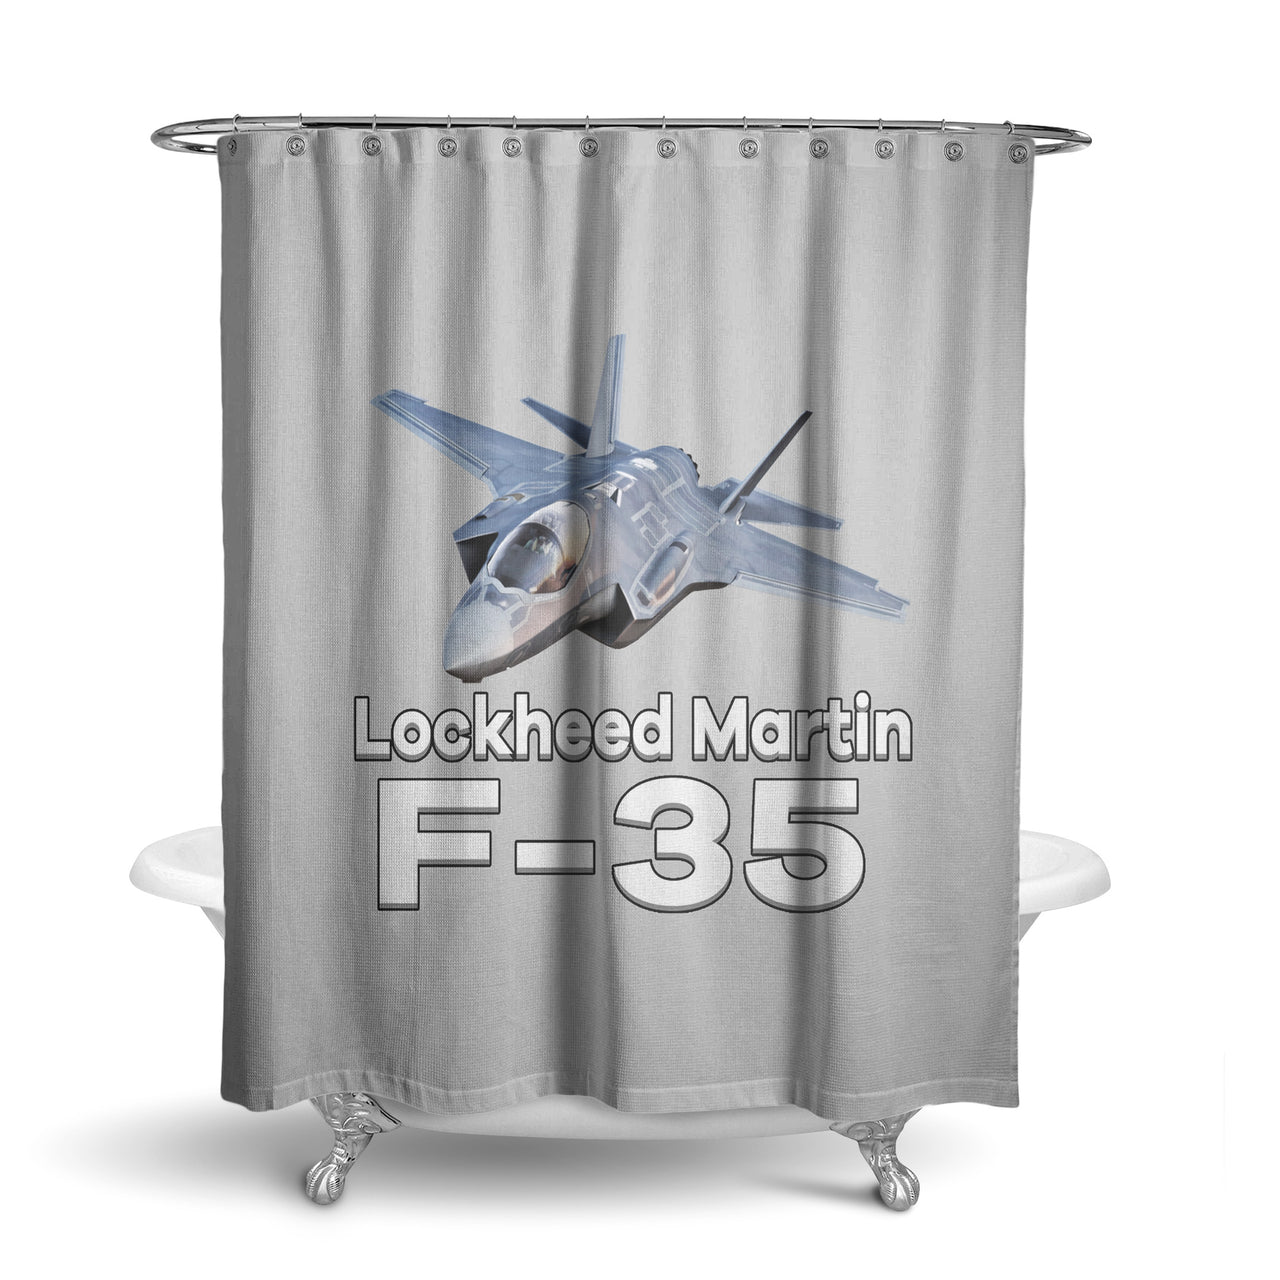 The Lockheed Martin F35 Designed Shower Curtains